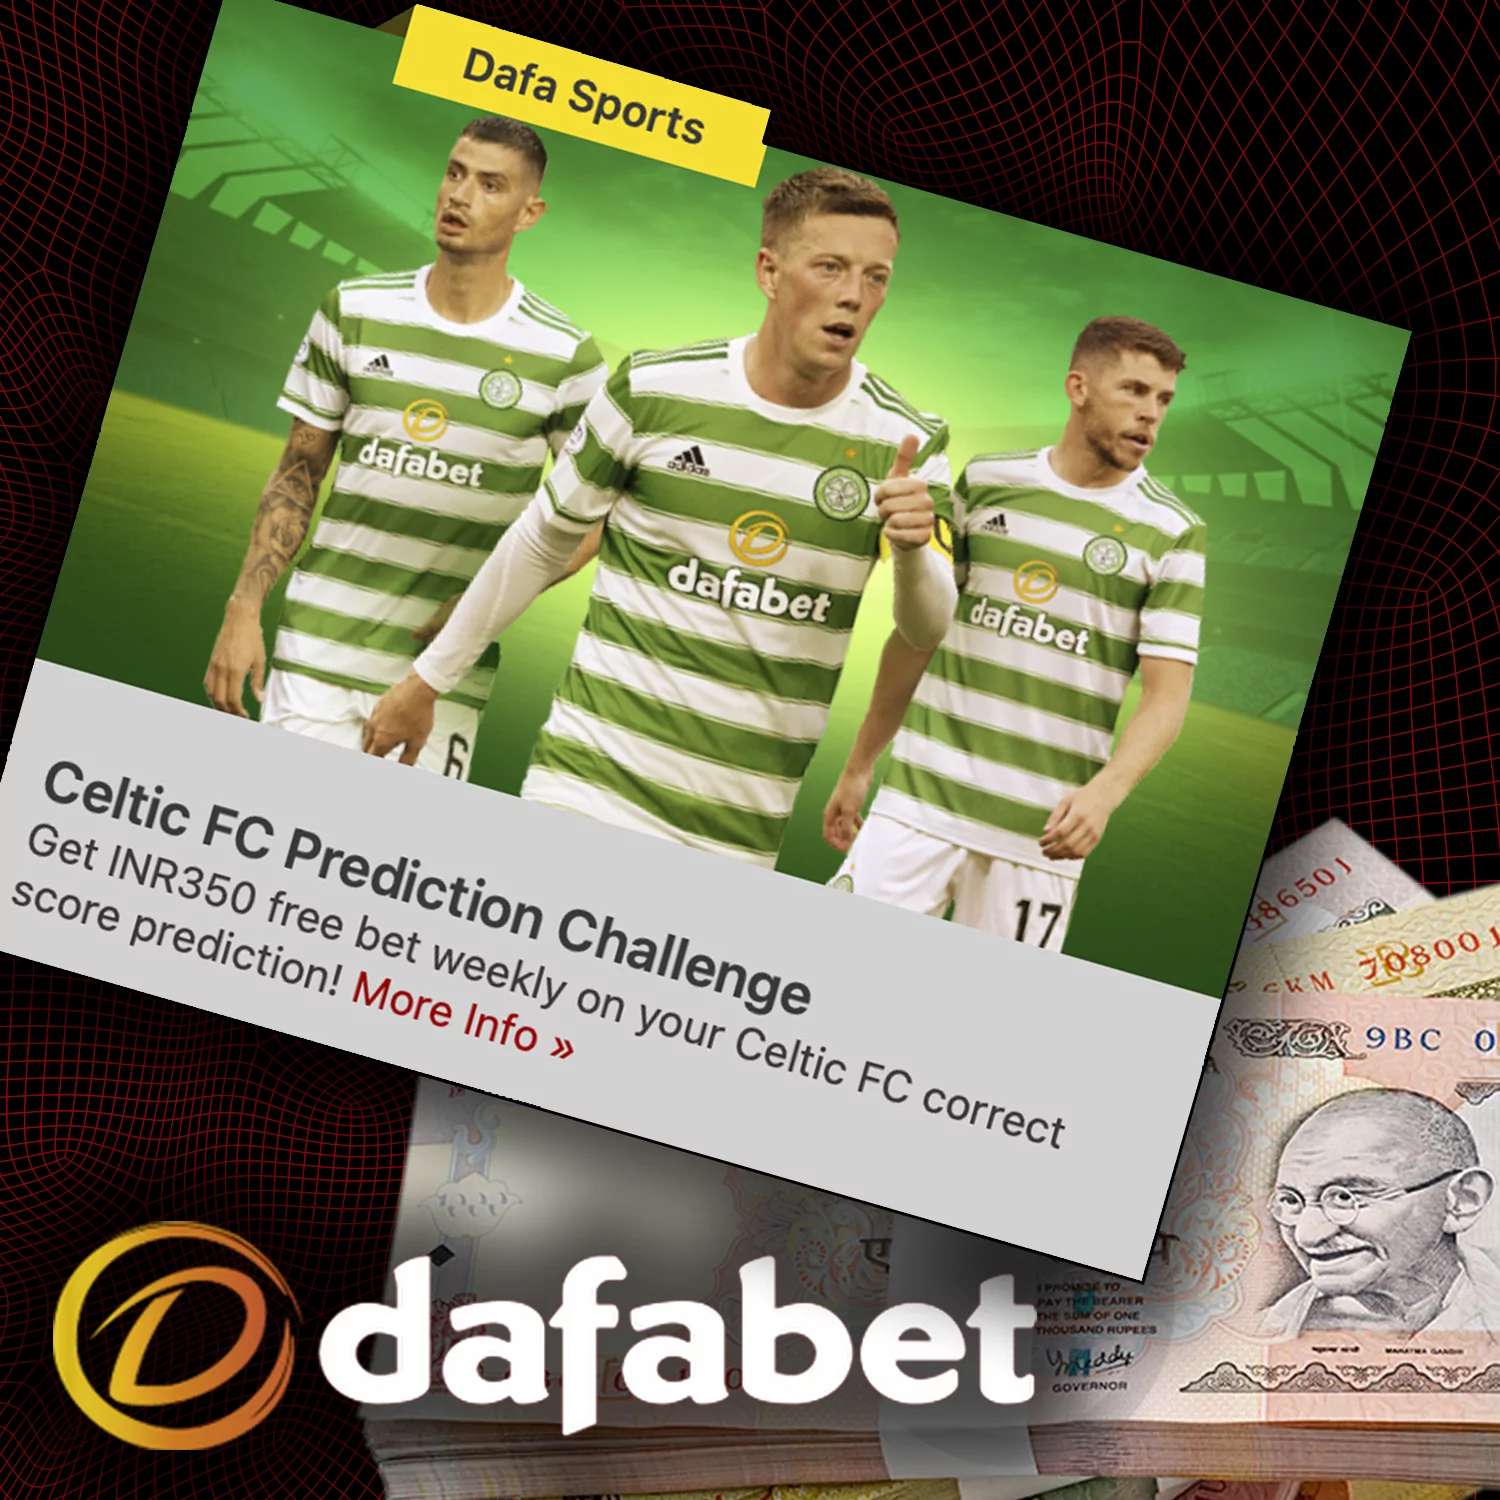 Dafabet provides additional bonuses for predictions.